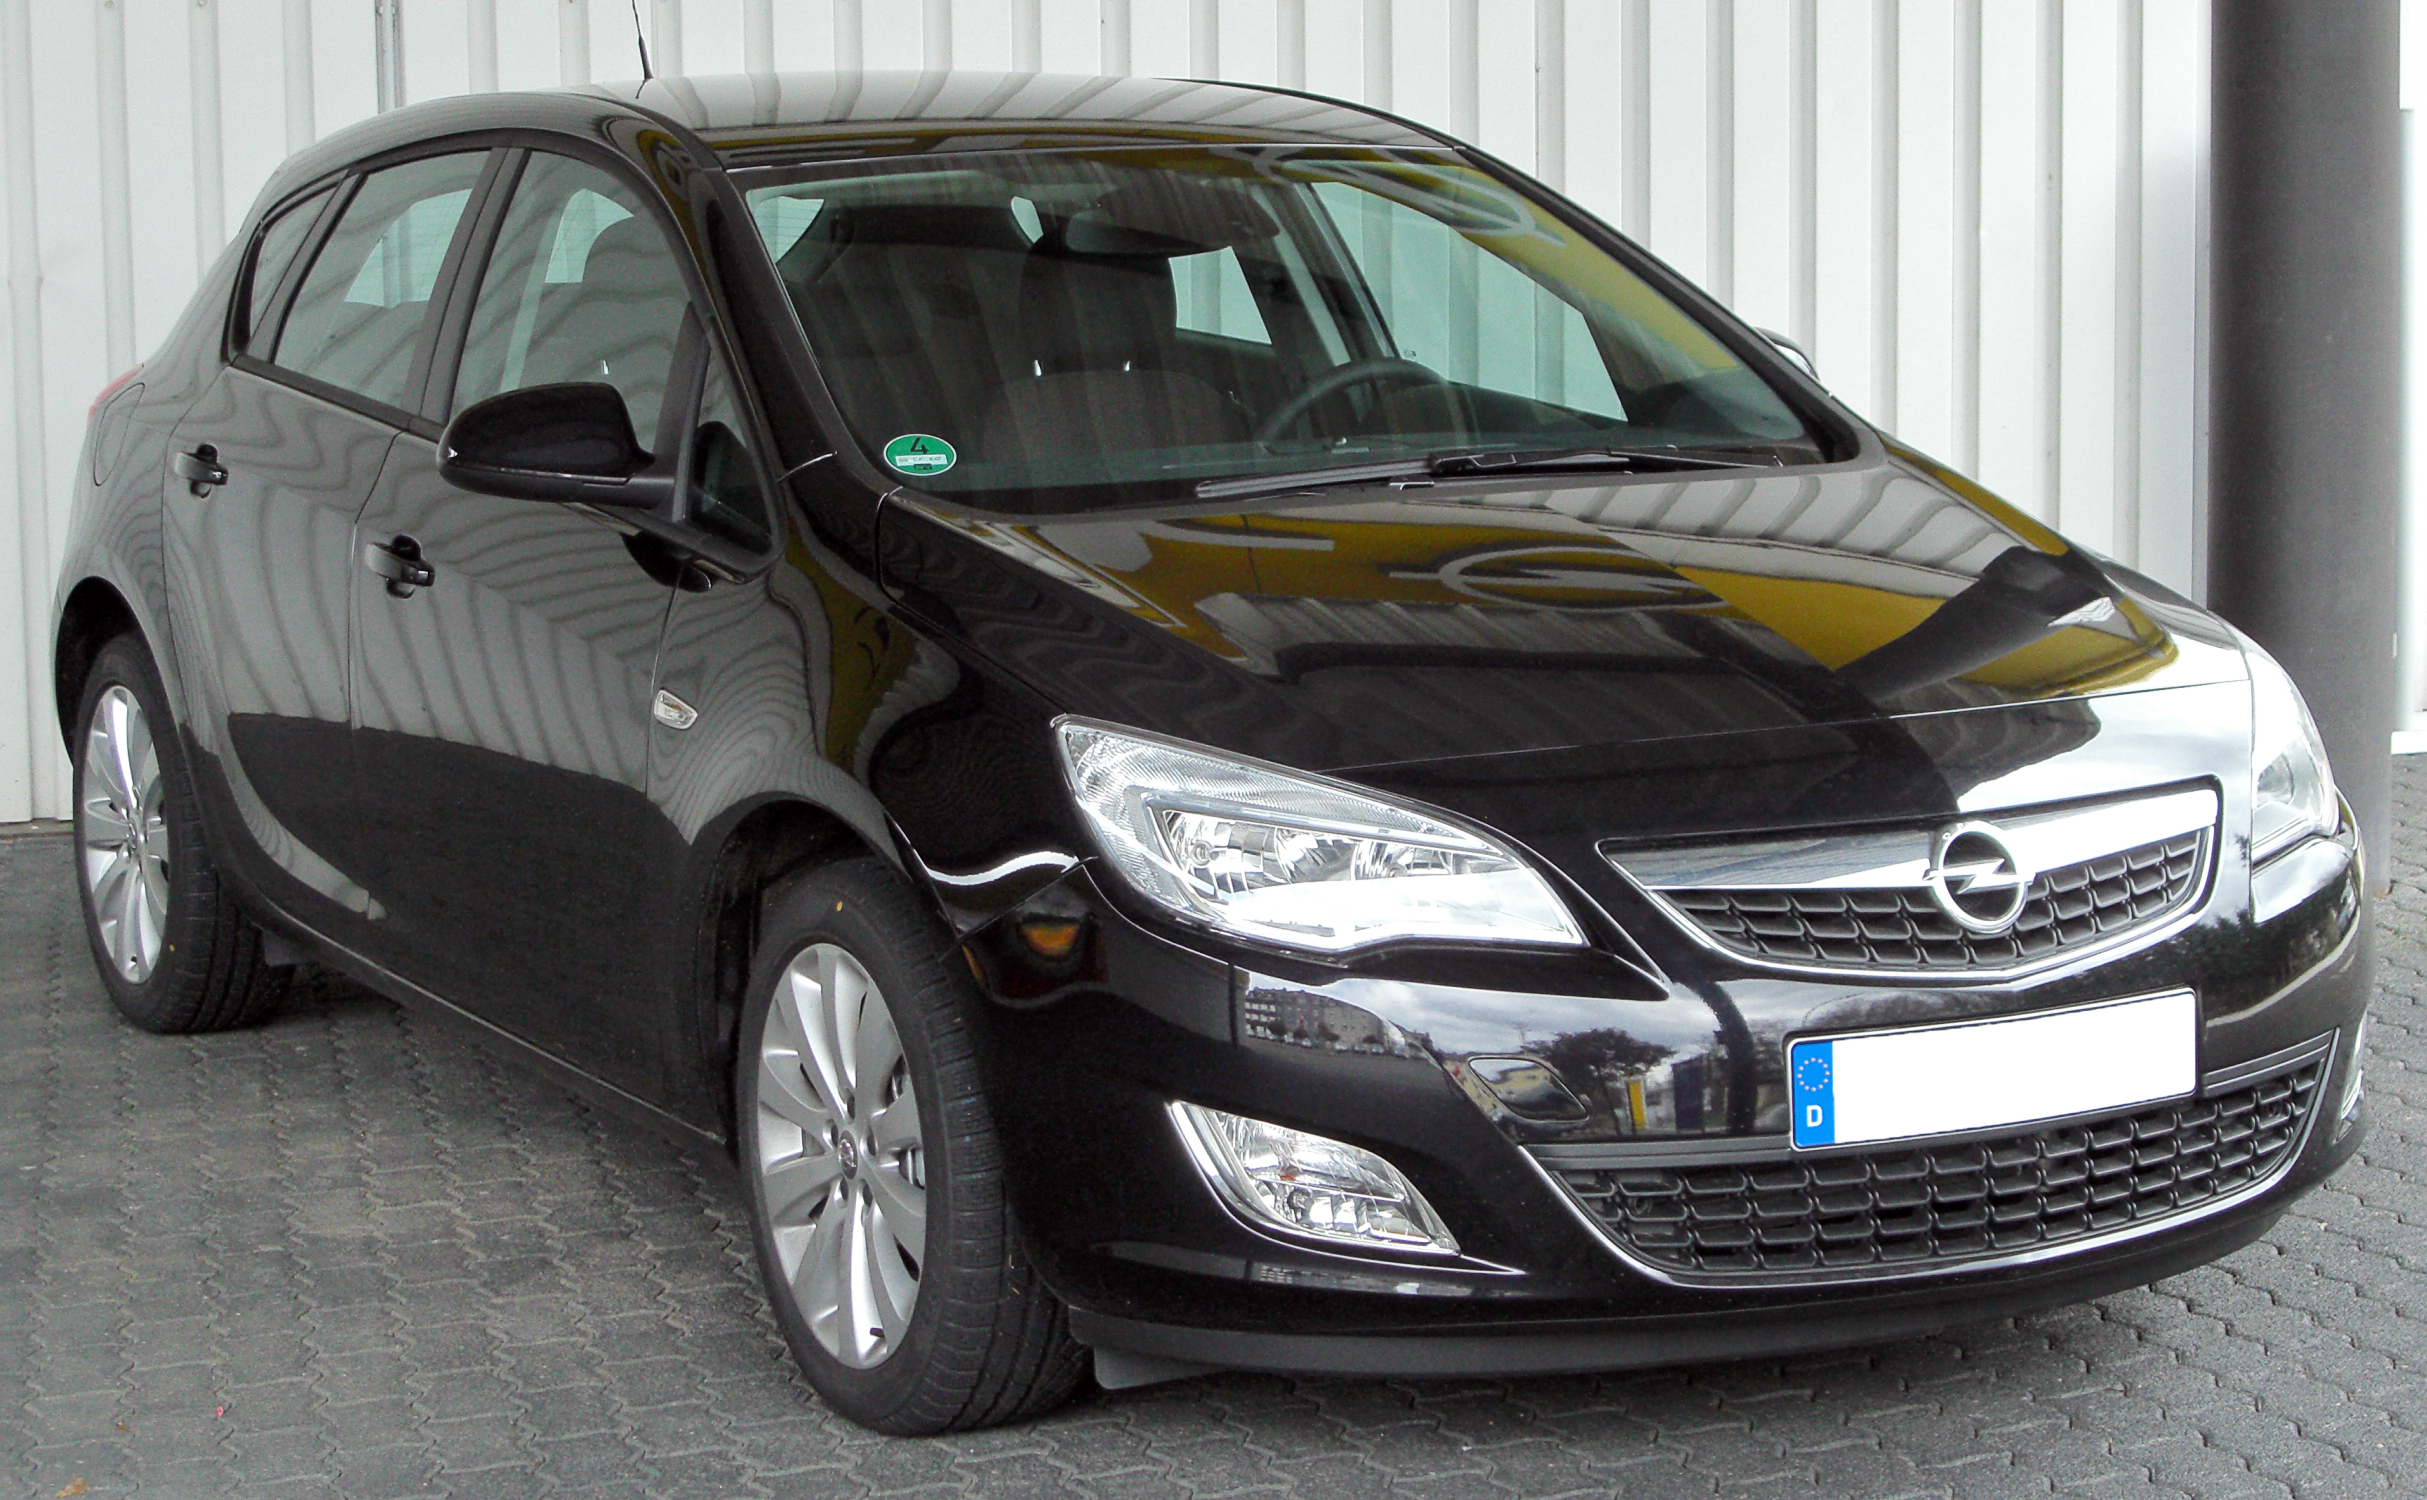 File:Opel Astra J front 20100725.jpg - Wikipedia